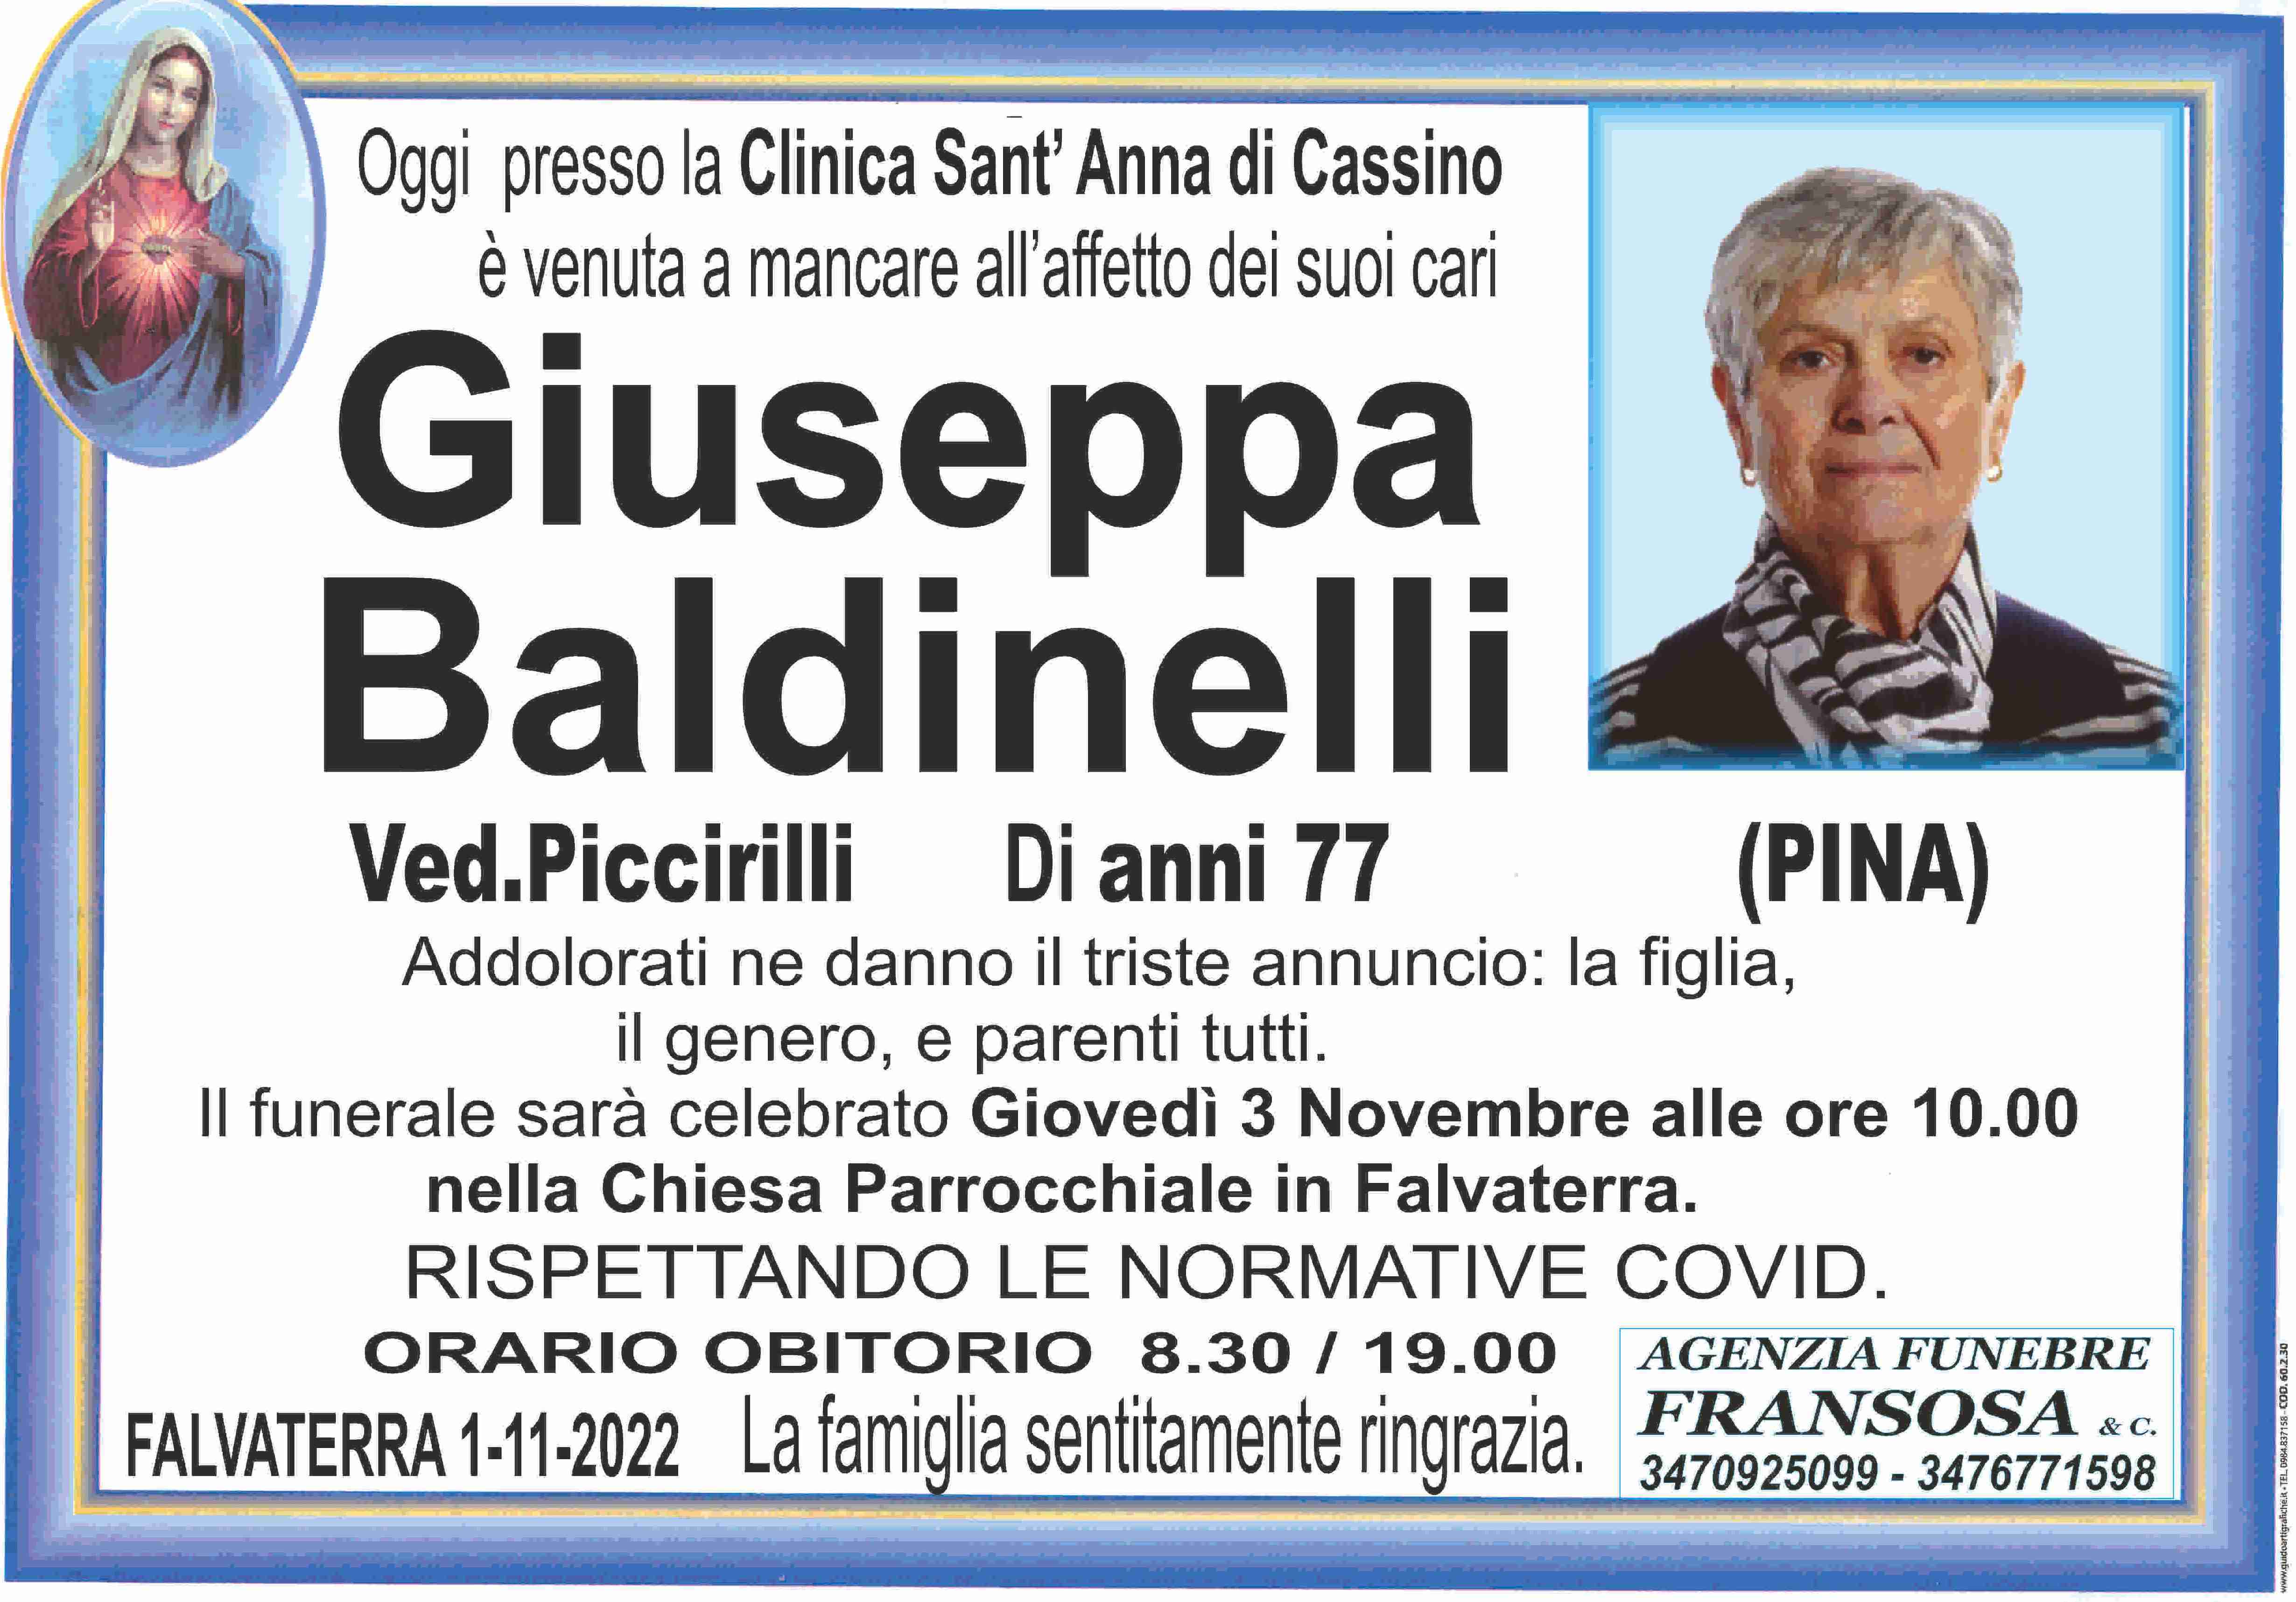 Giuseppa Baldinelli